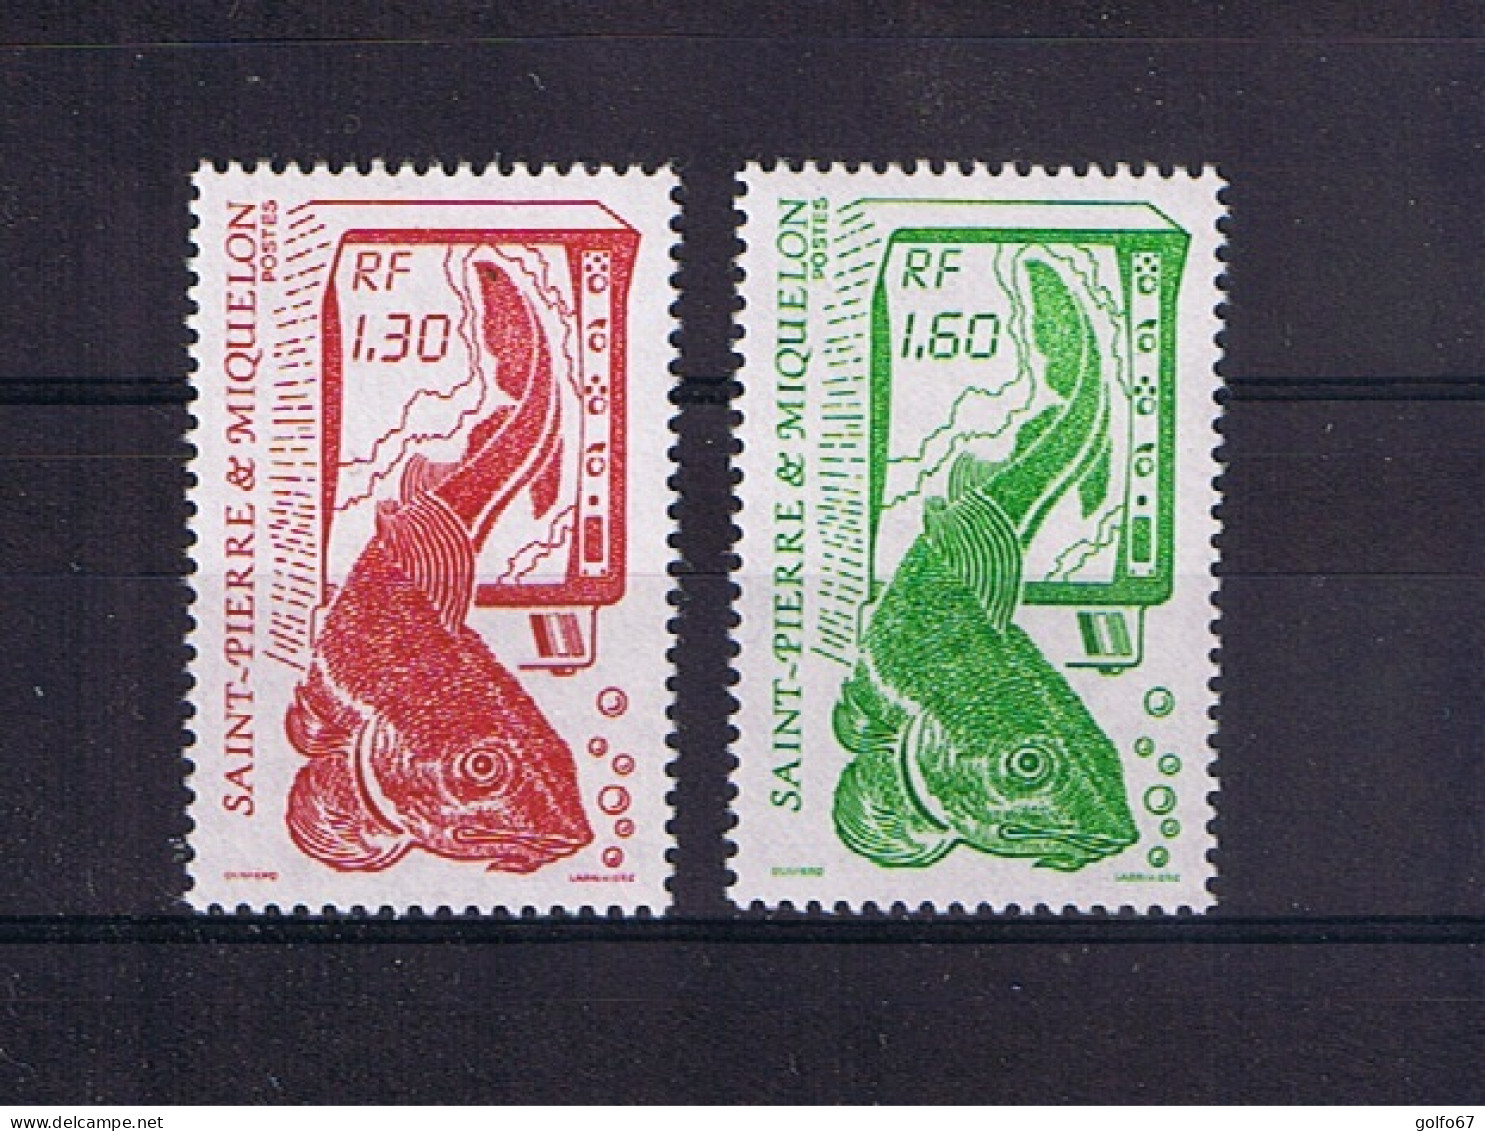 ST PIERRE & MIQUELON 1988 Y&T N° 490 - 491 NEUF** - Unused Stamps